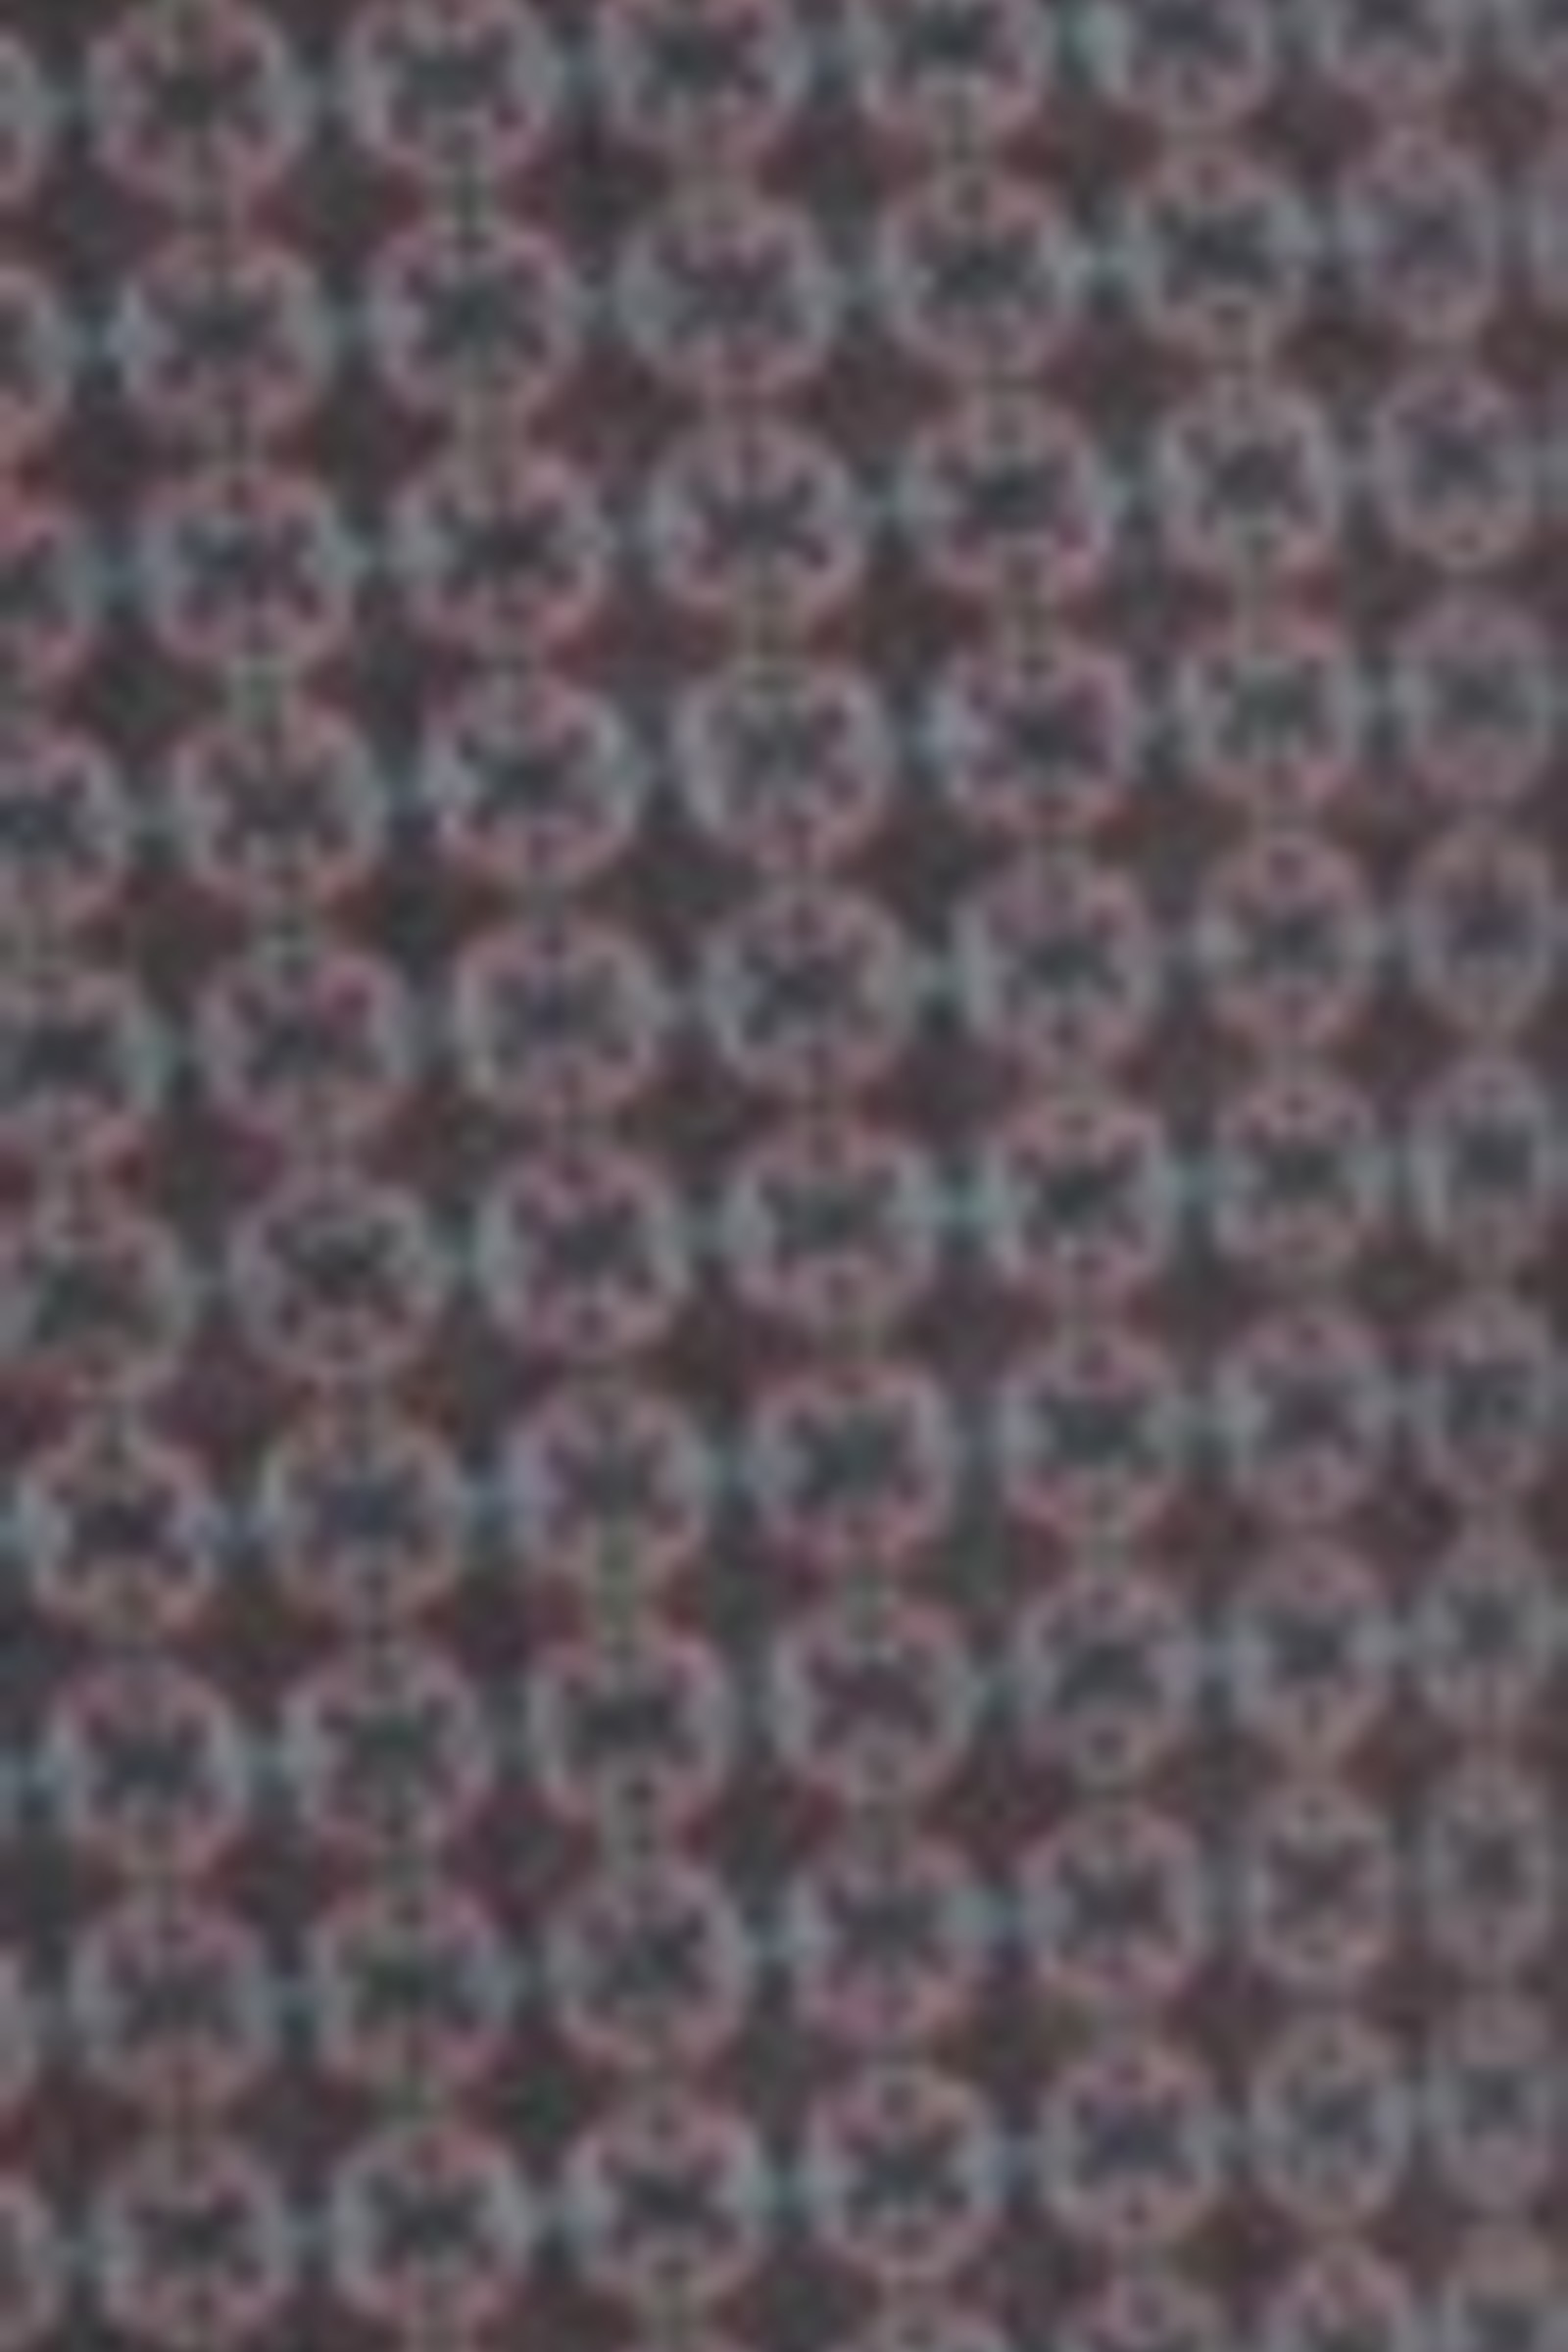 IVKO  Woman IVKO Outlet - Knitted Pants Geometric Pattern Slate